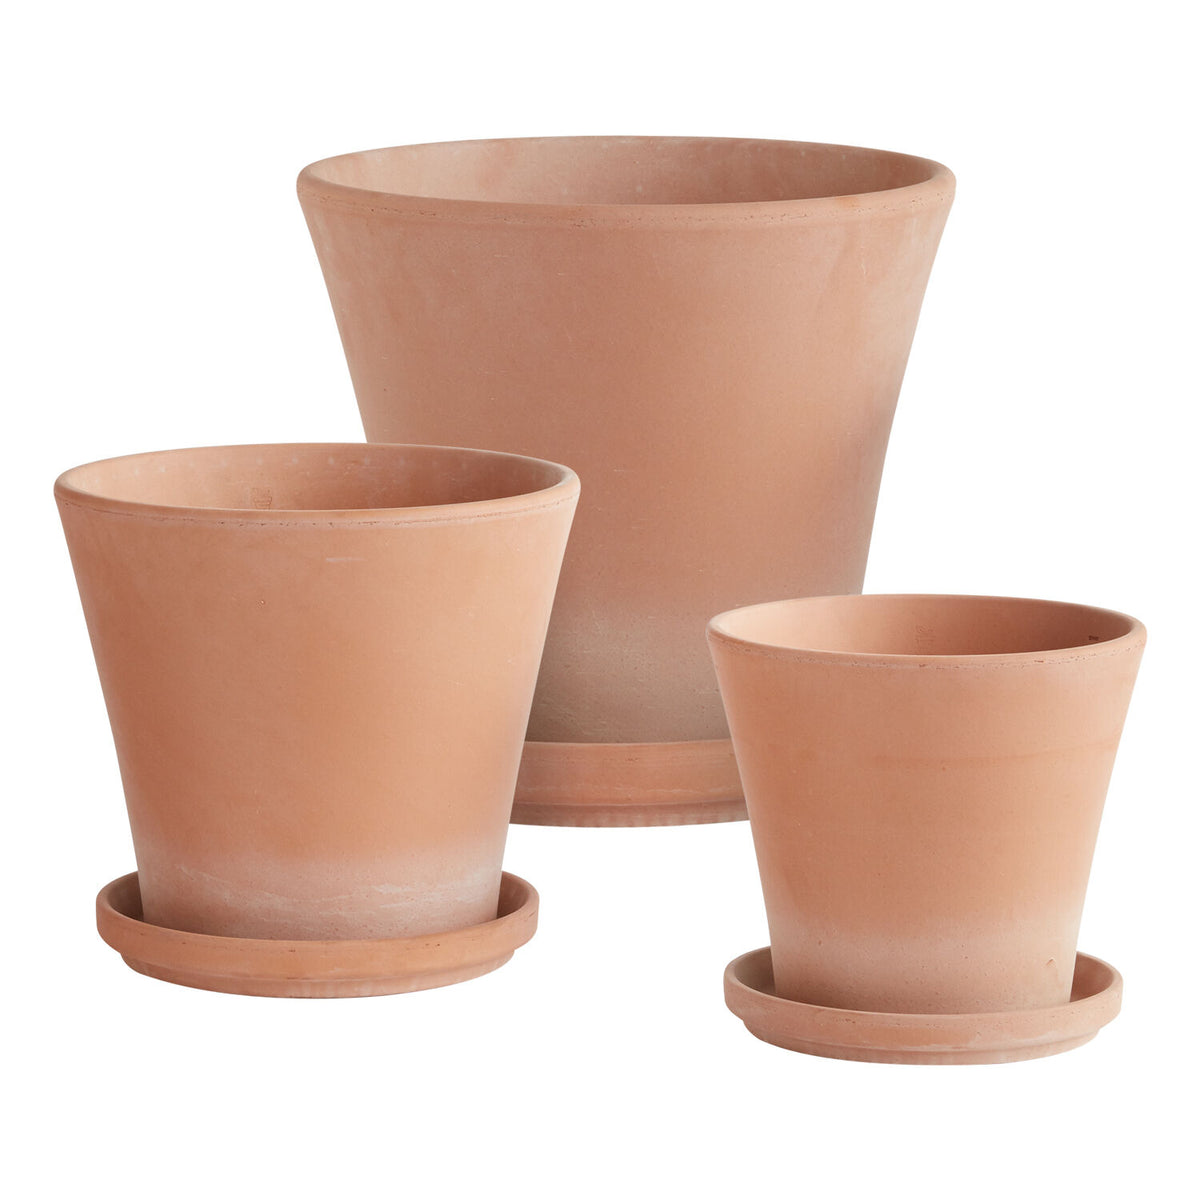 Everly Terracotta Pot With Saucer - Medium - Holistic Habitat 